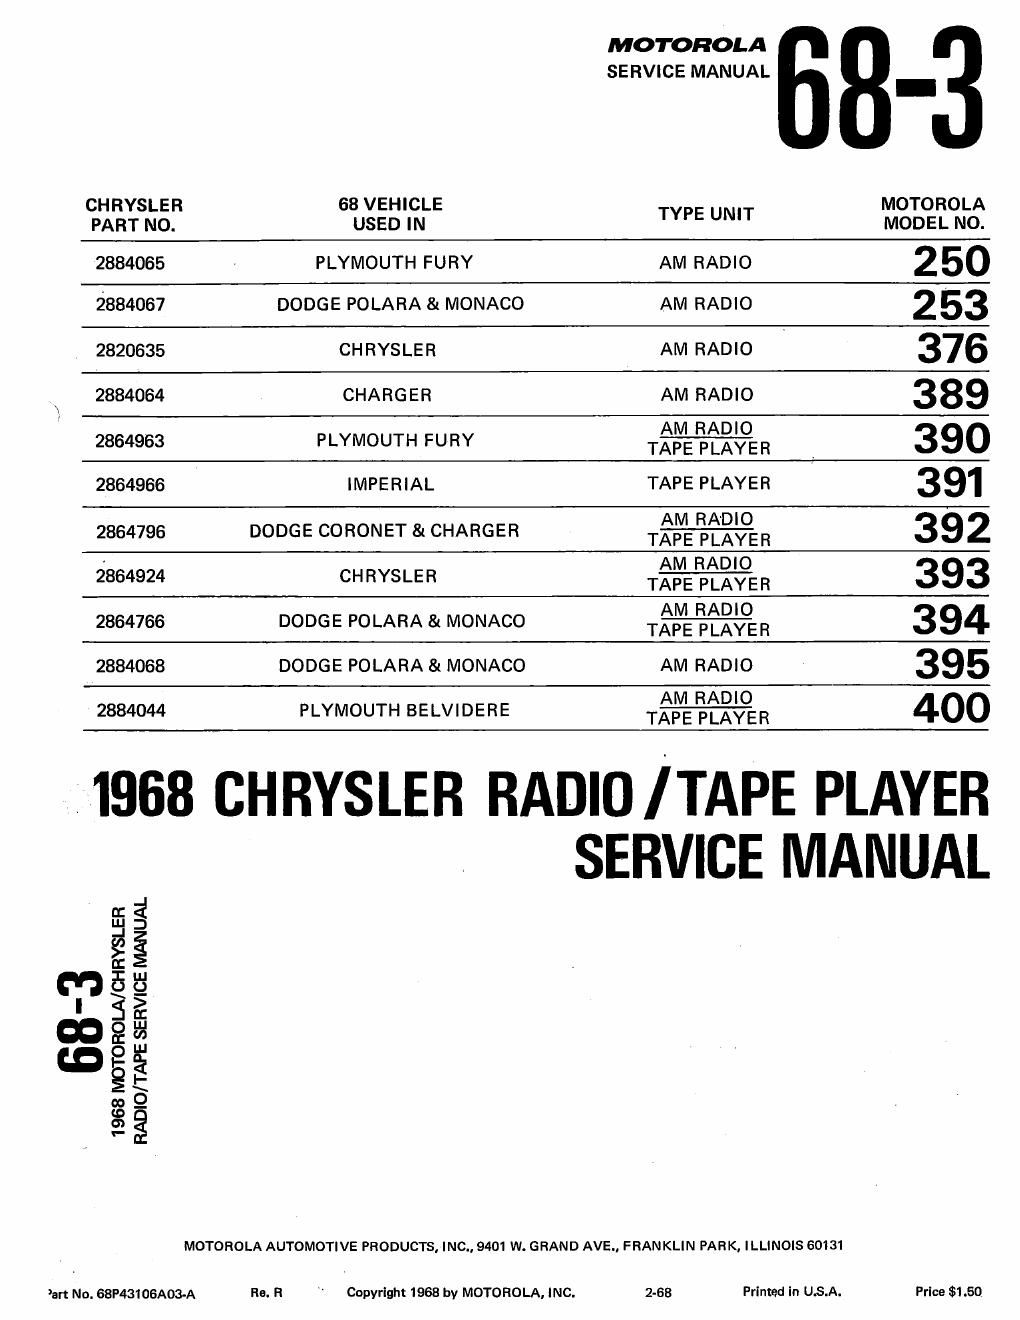 motorola 389 service manual